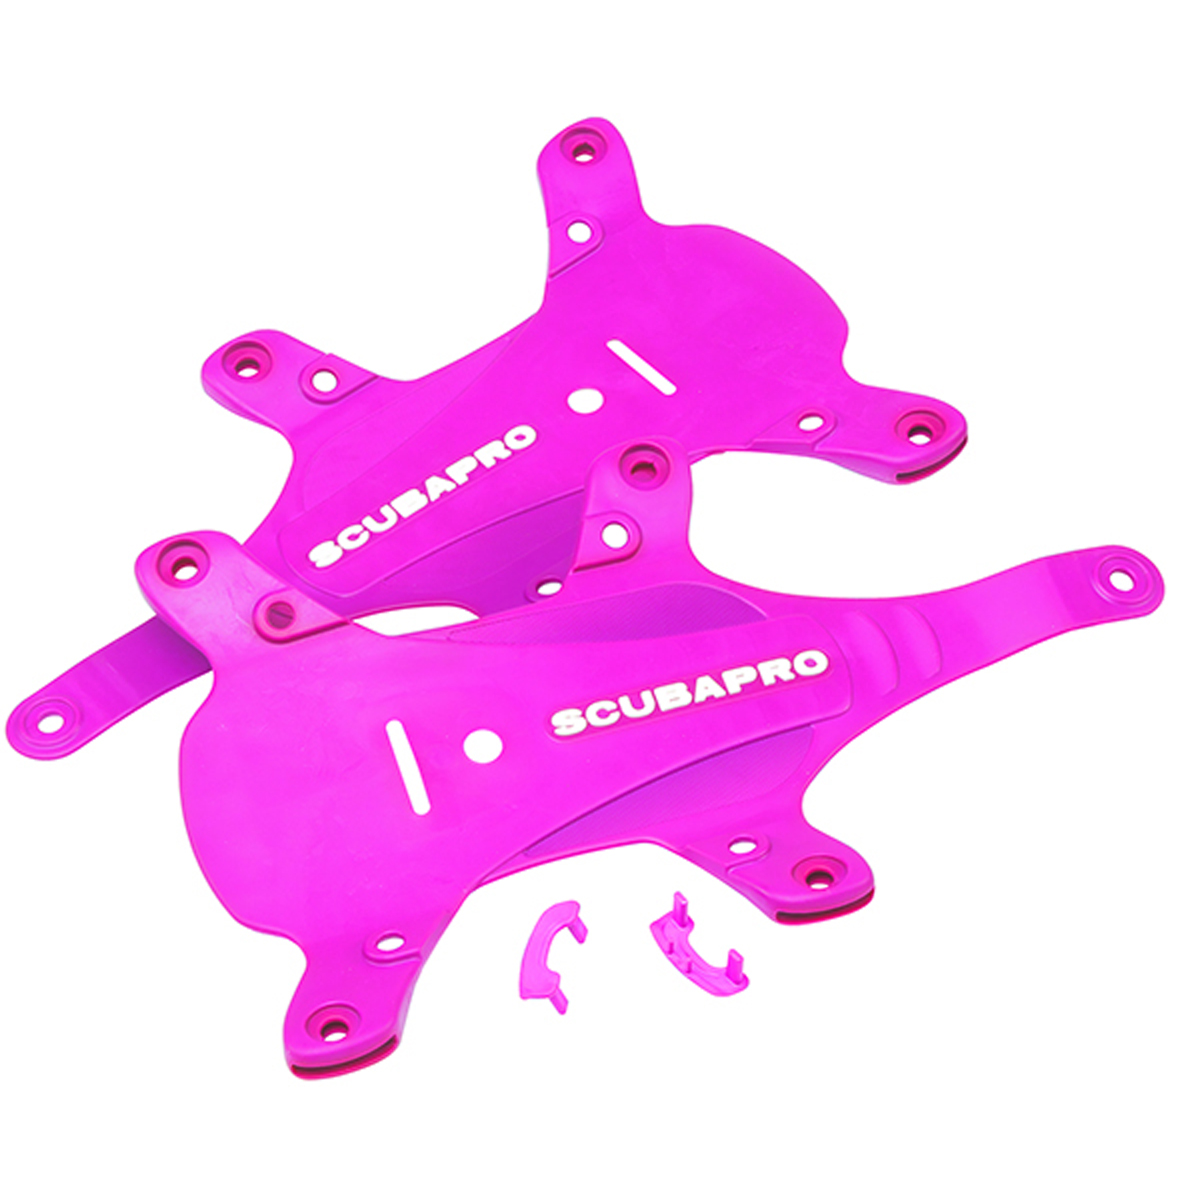 ScubaPro Hydros Pro BCD Color Kit - Pink